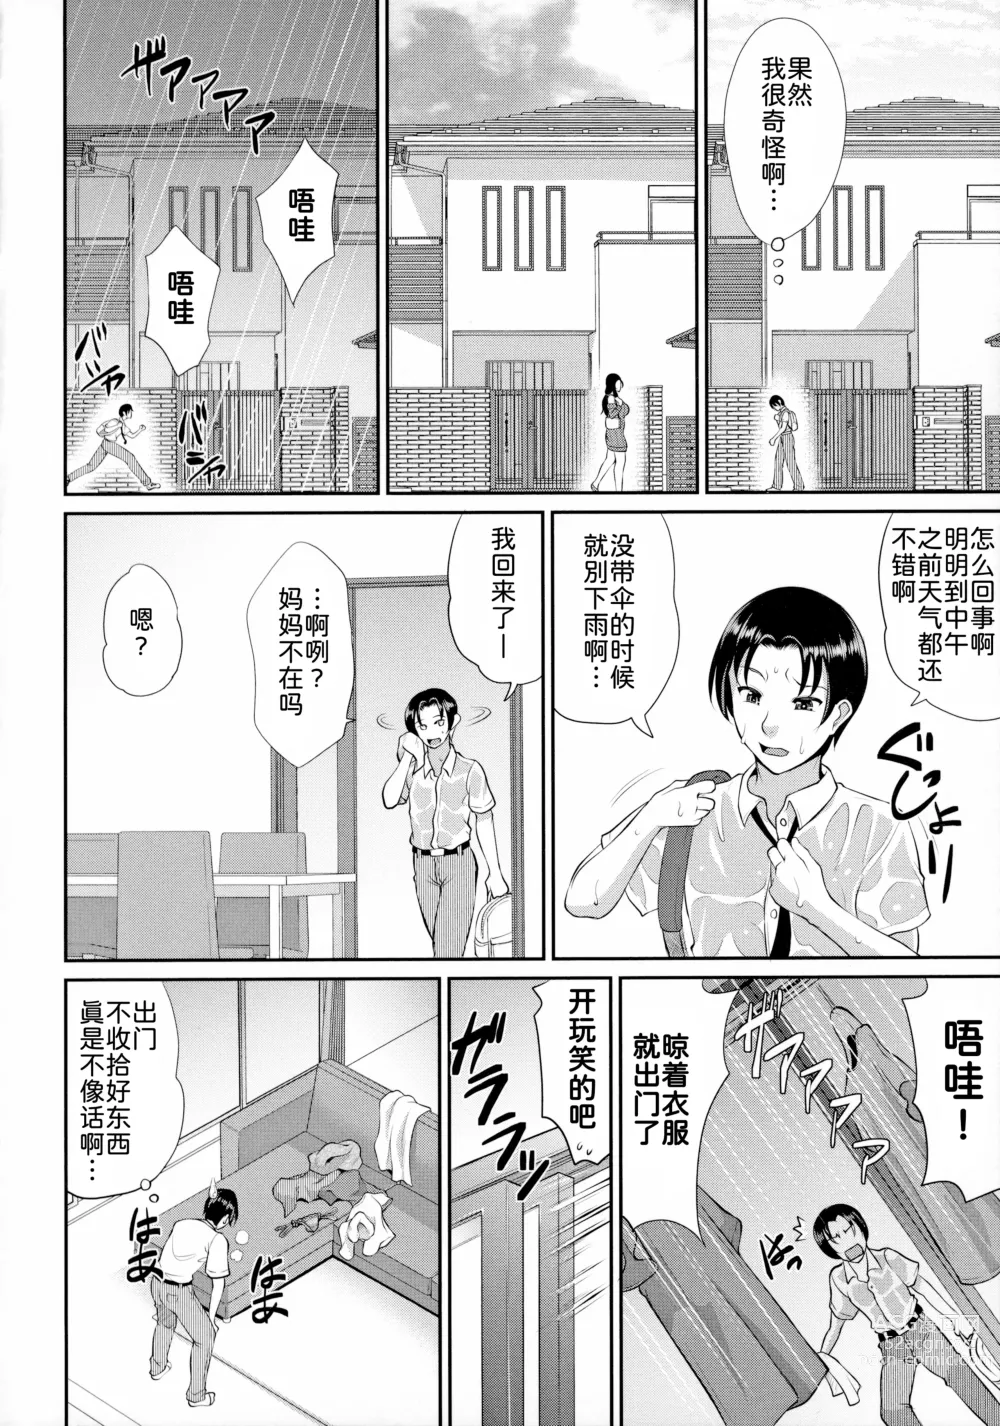 Page 7 of manga Uruwashi no Wife